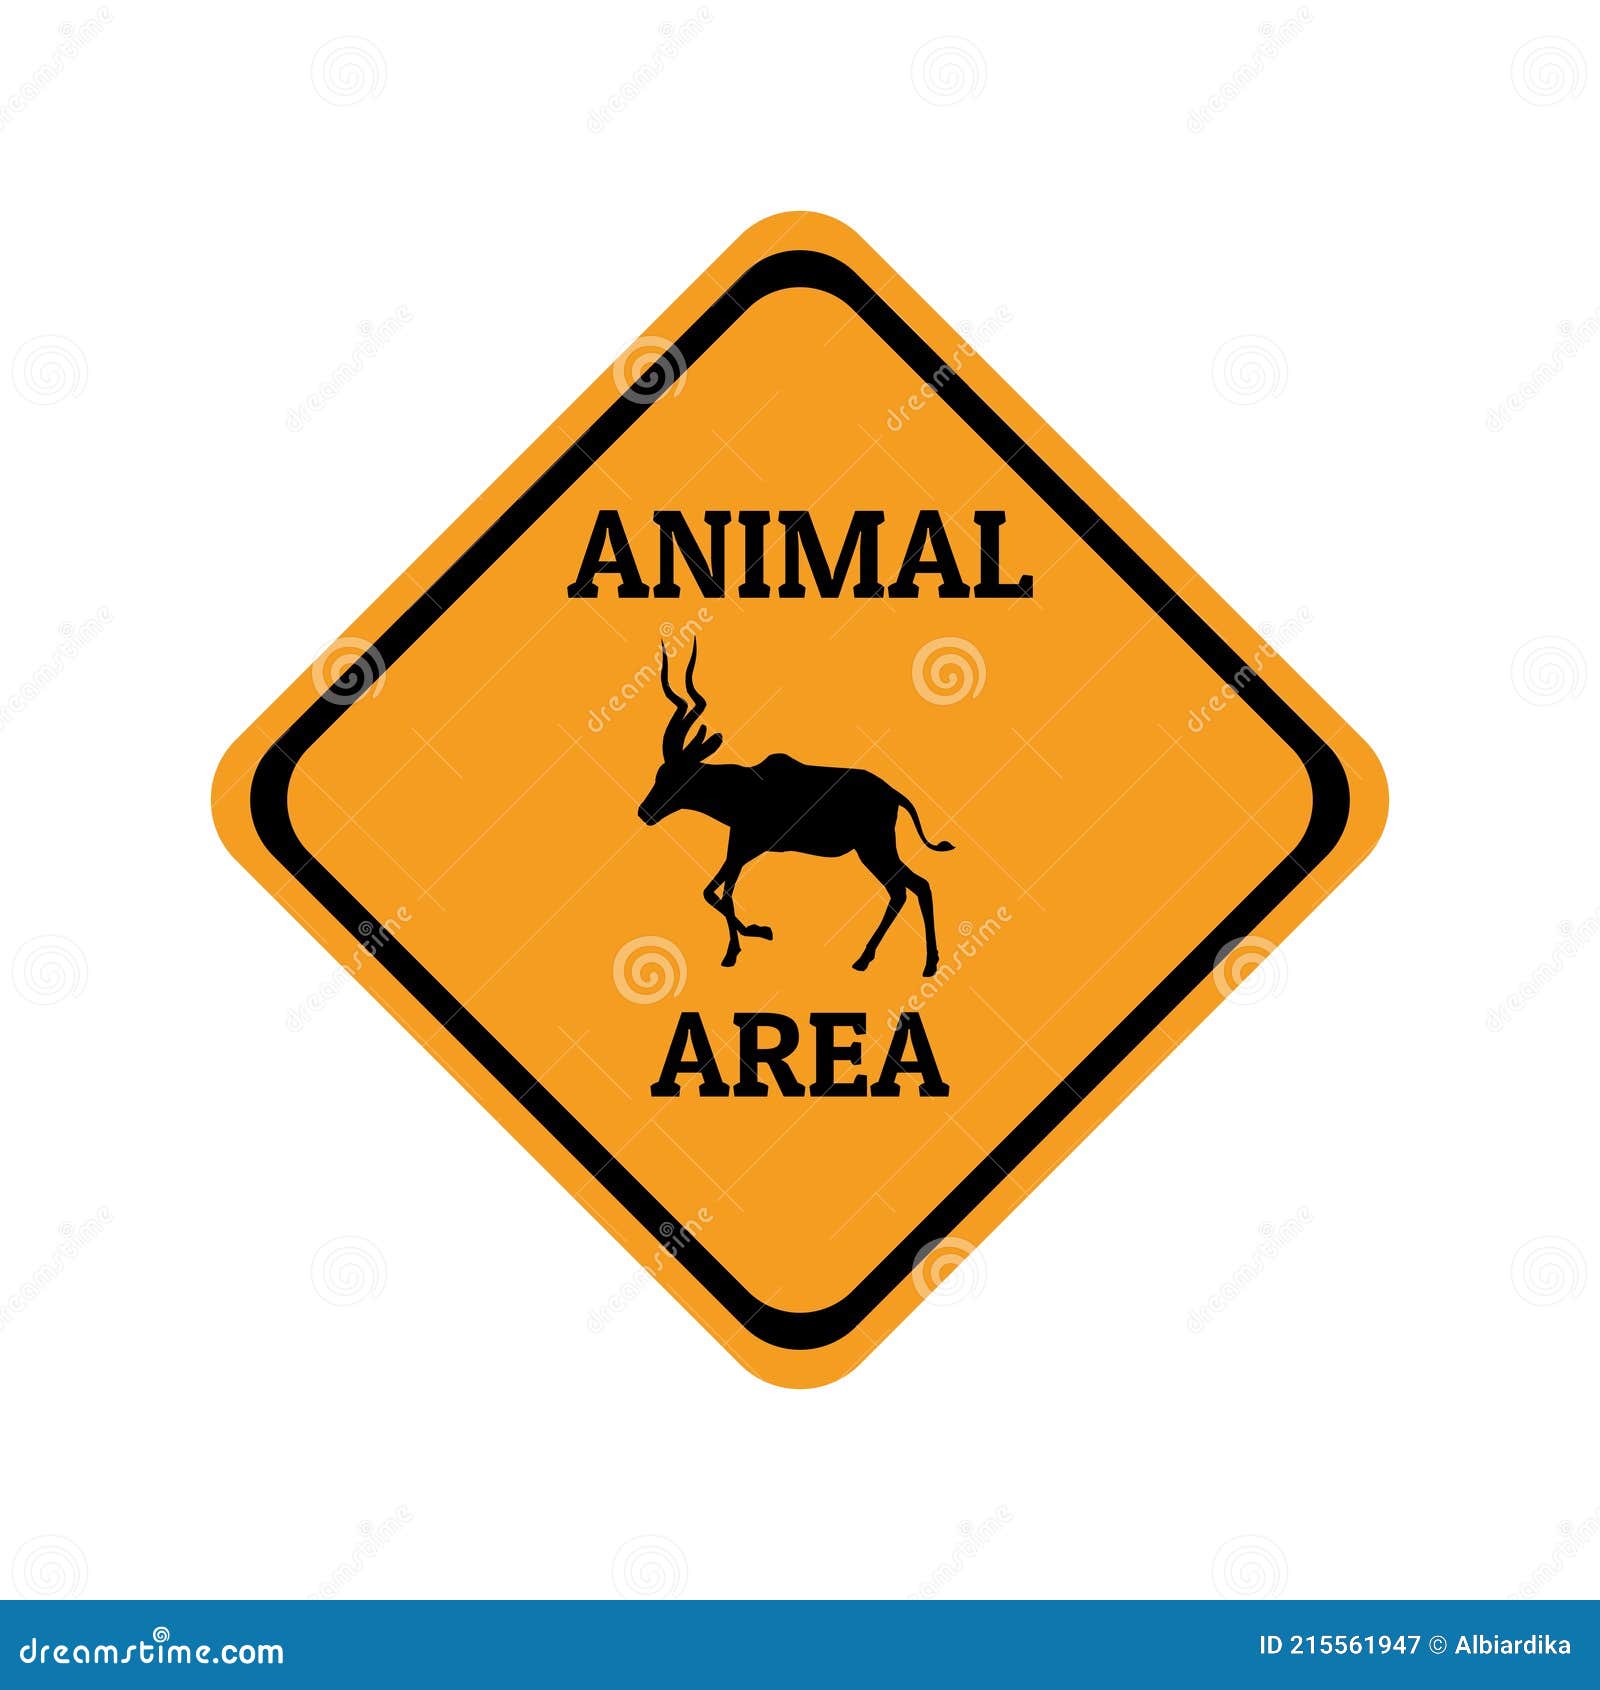 Antilope Hirsch Tier Warnung Verkehrszeichen Design Vektor